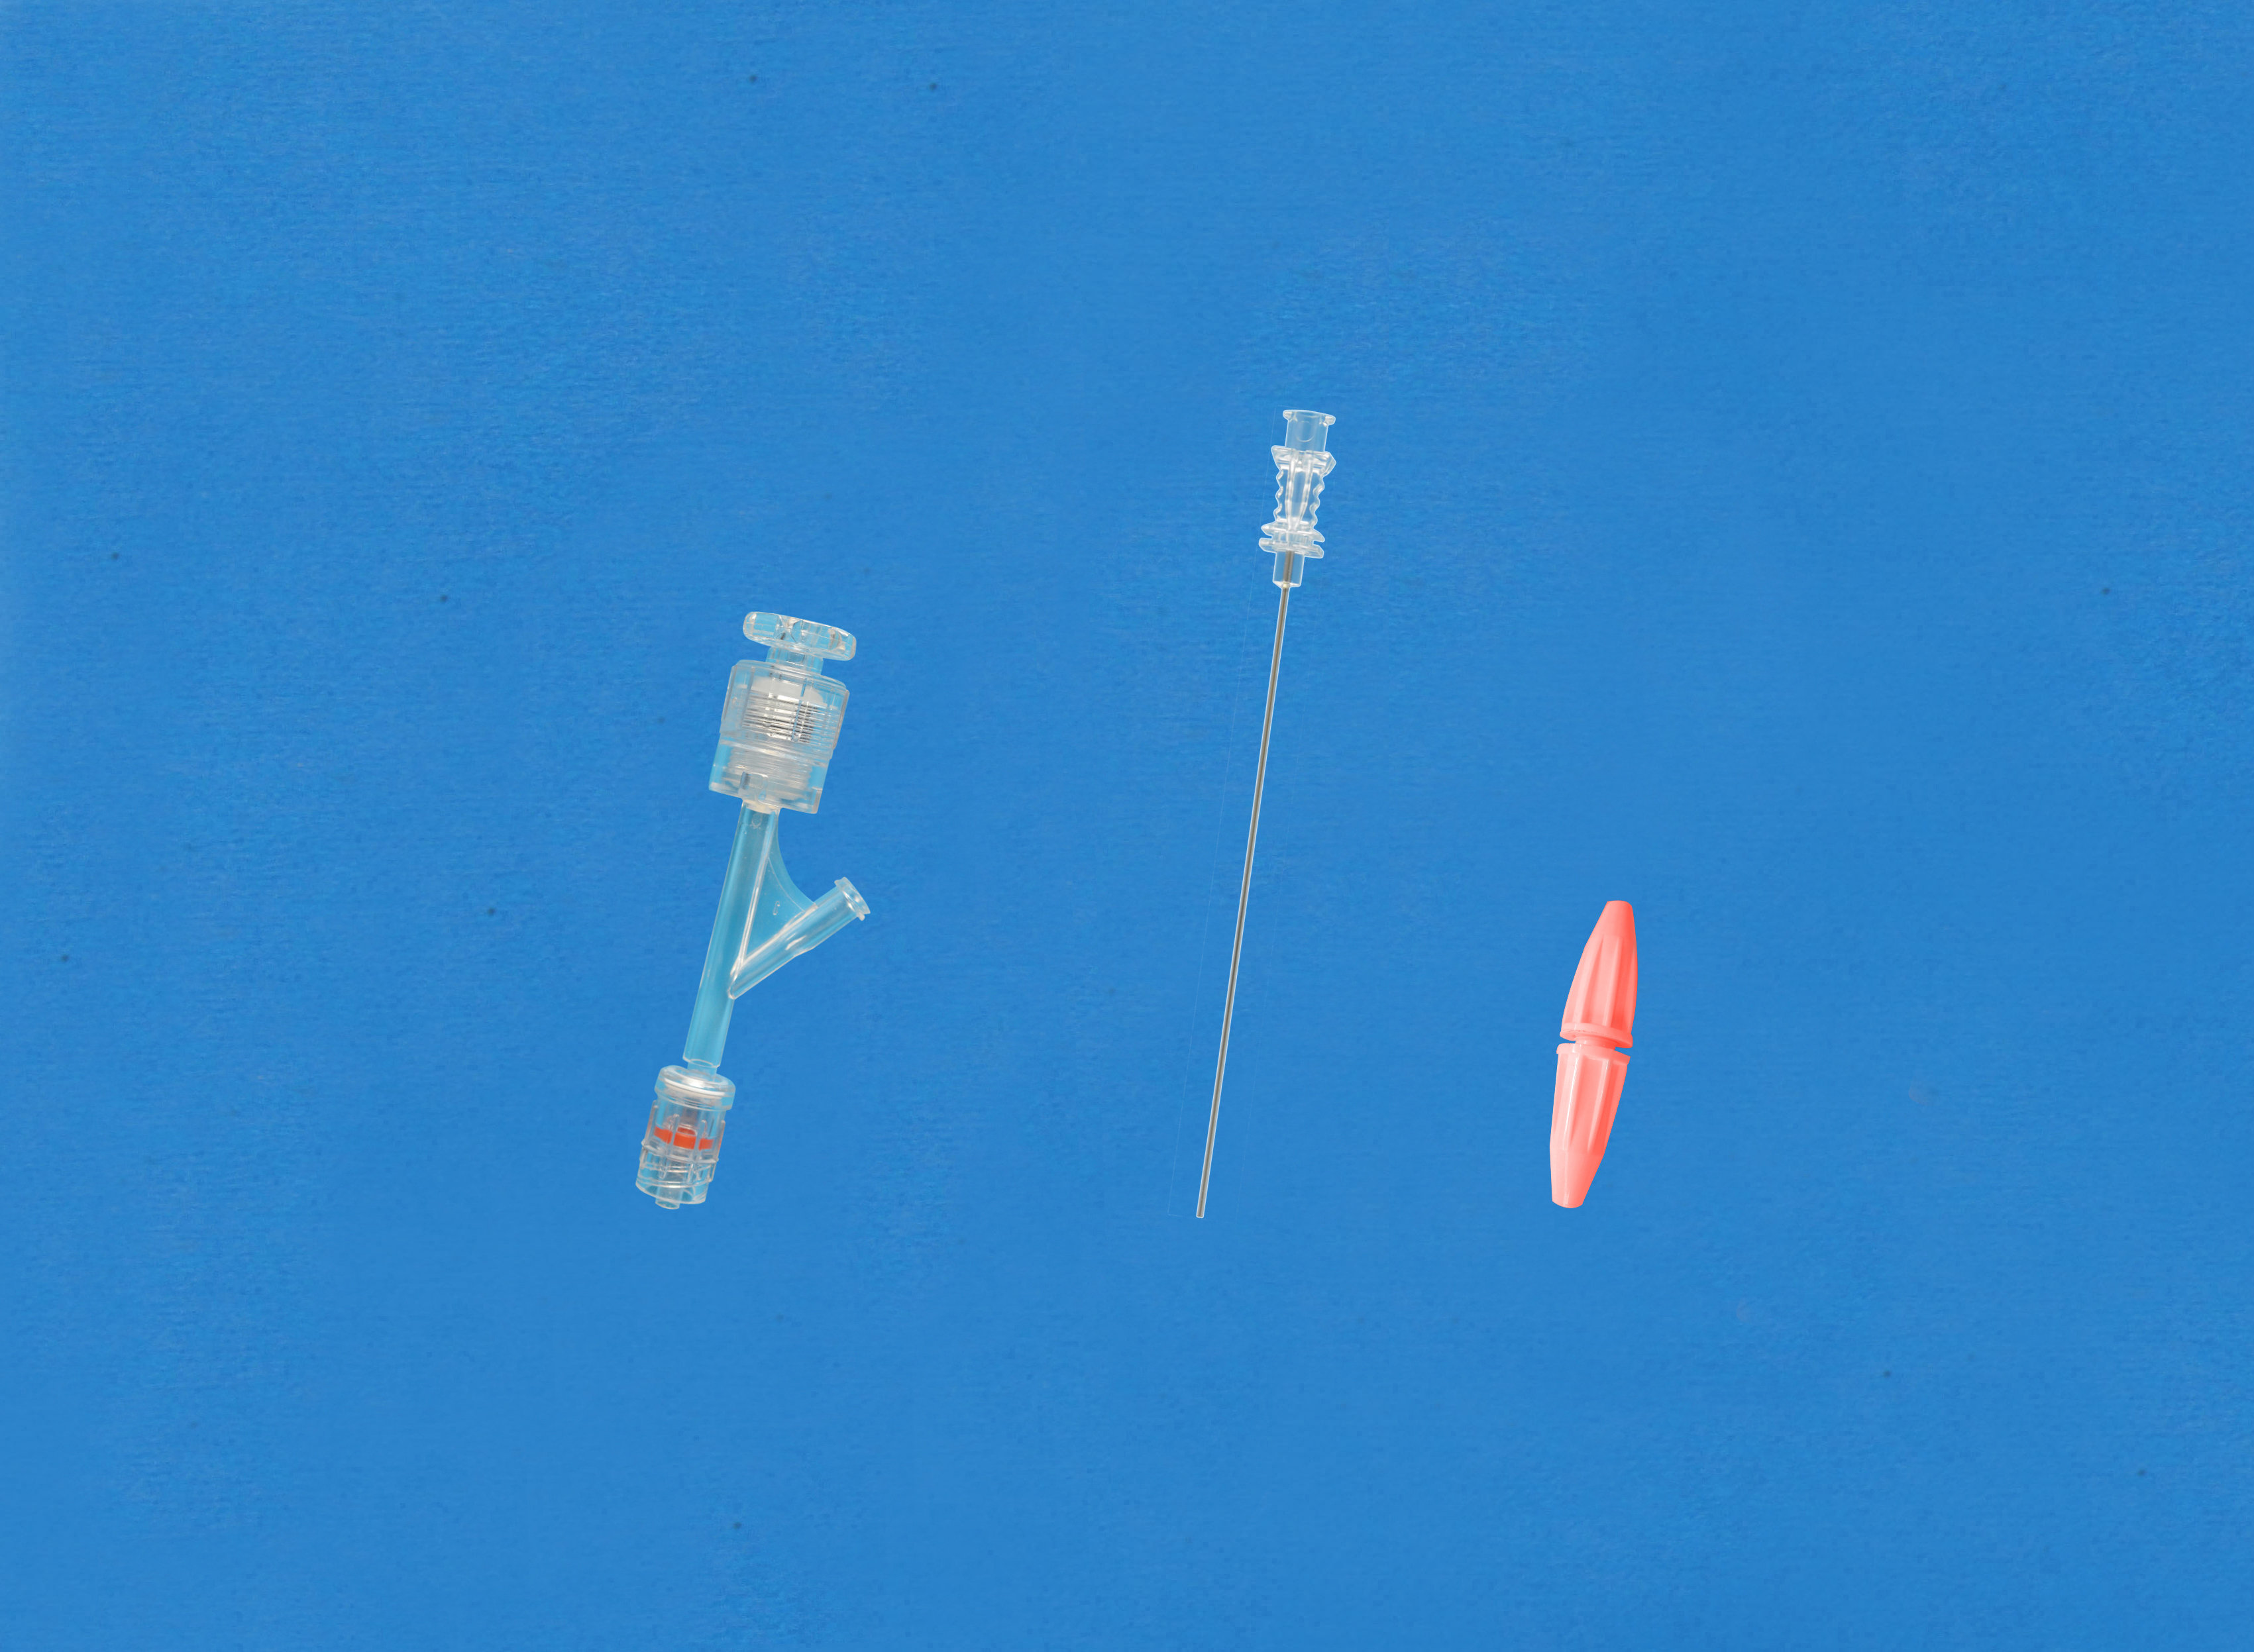 Haemostatic valves, Push-screw, Sideon Female Luer, Insertion Tool with Large Hub, Red/Plastic Torquer